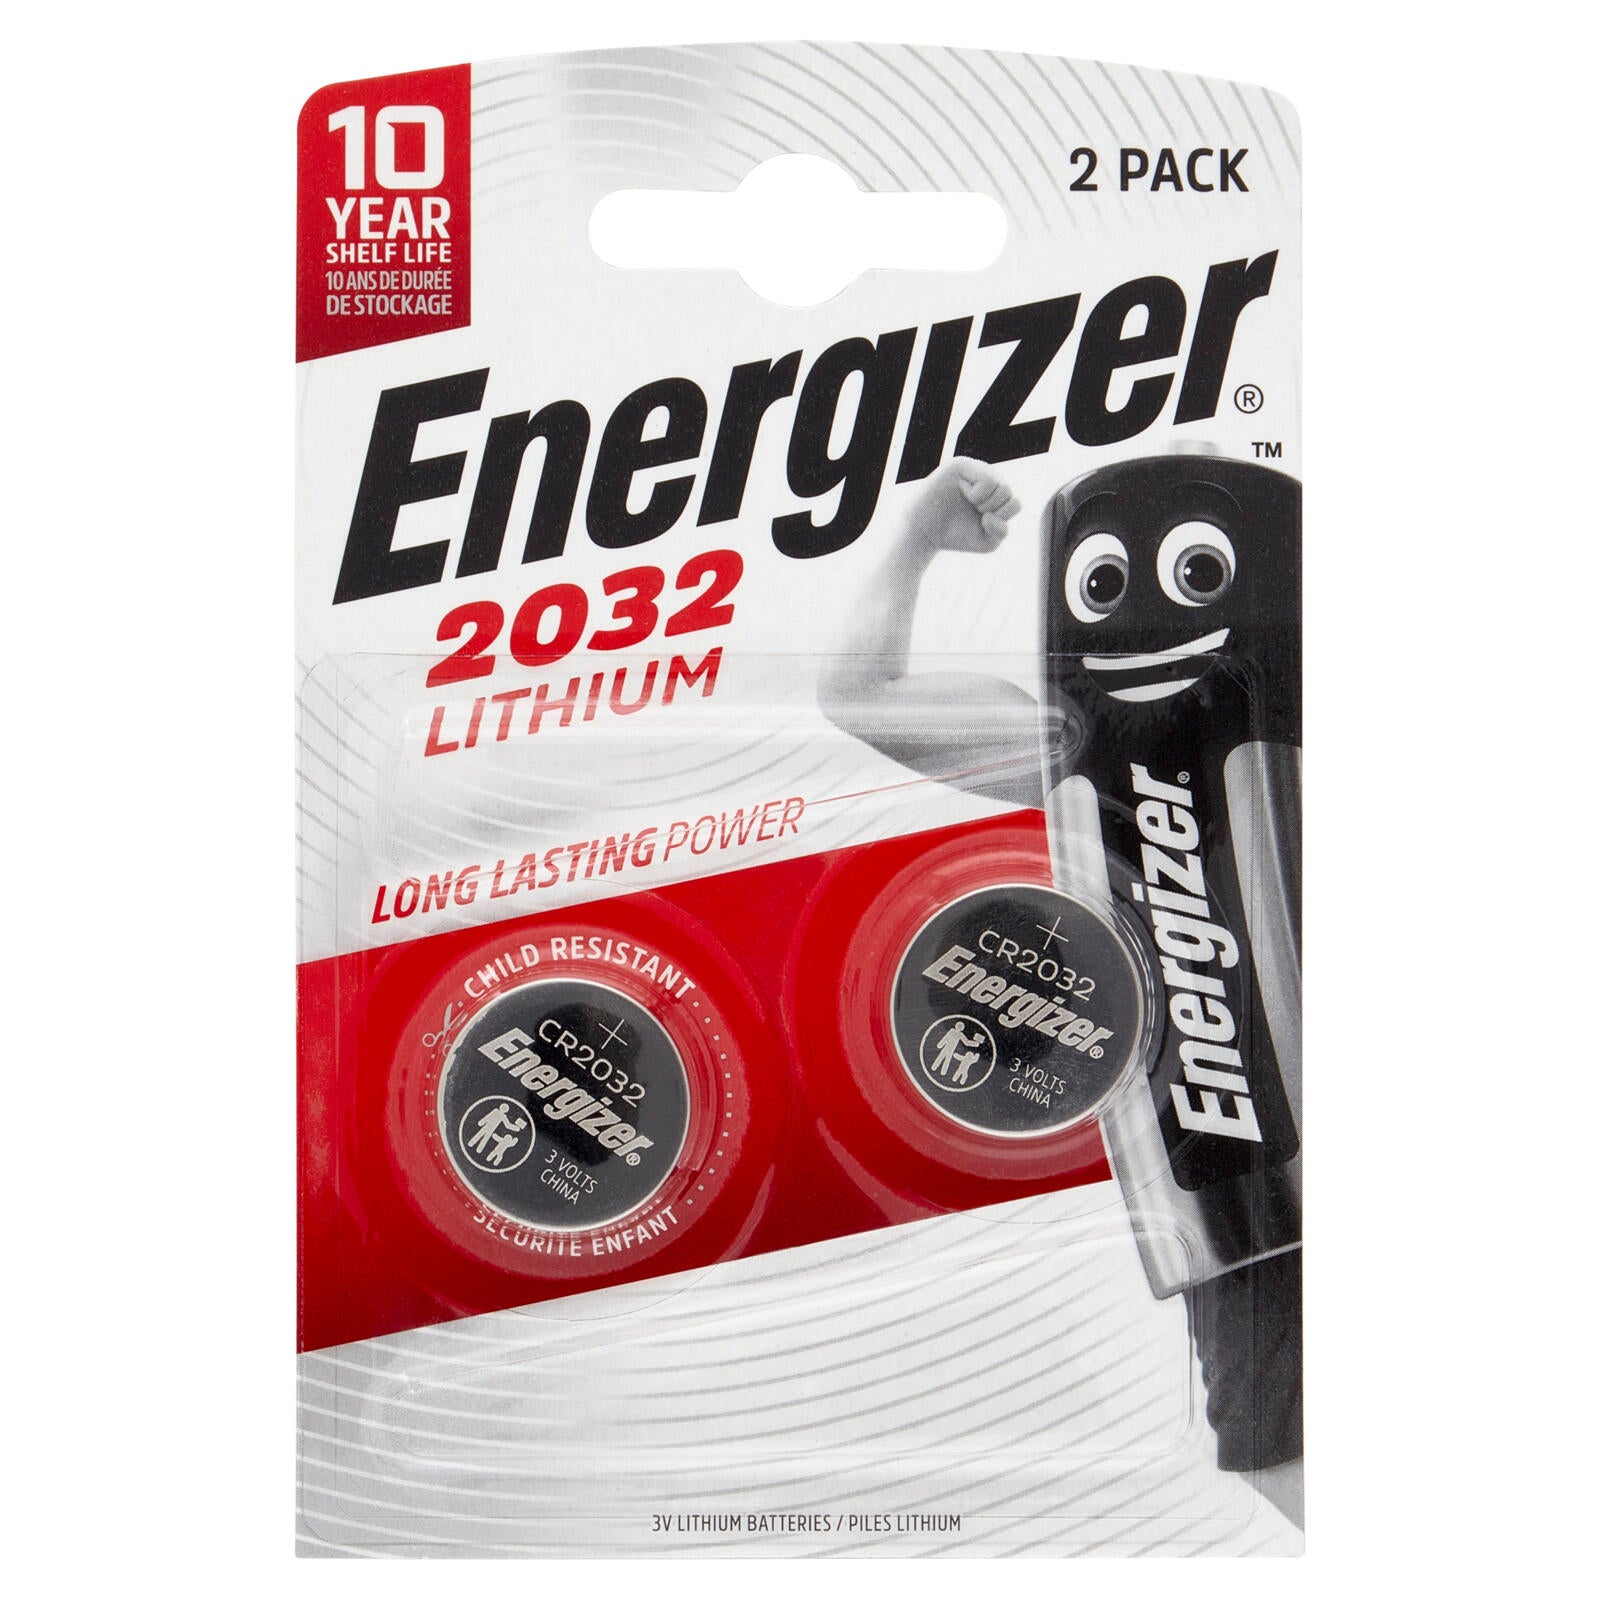 Energizer 2032 Lithium 2 pz